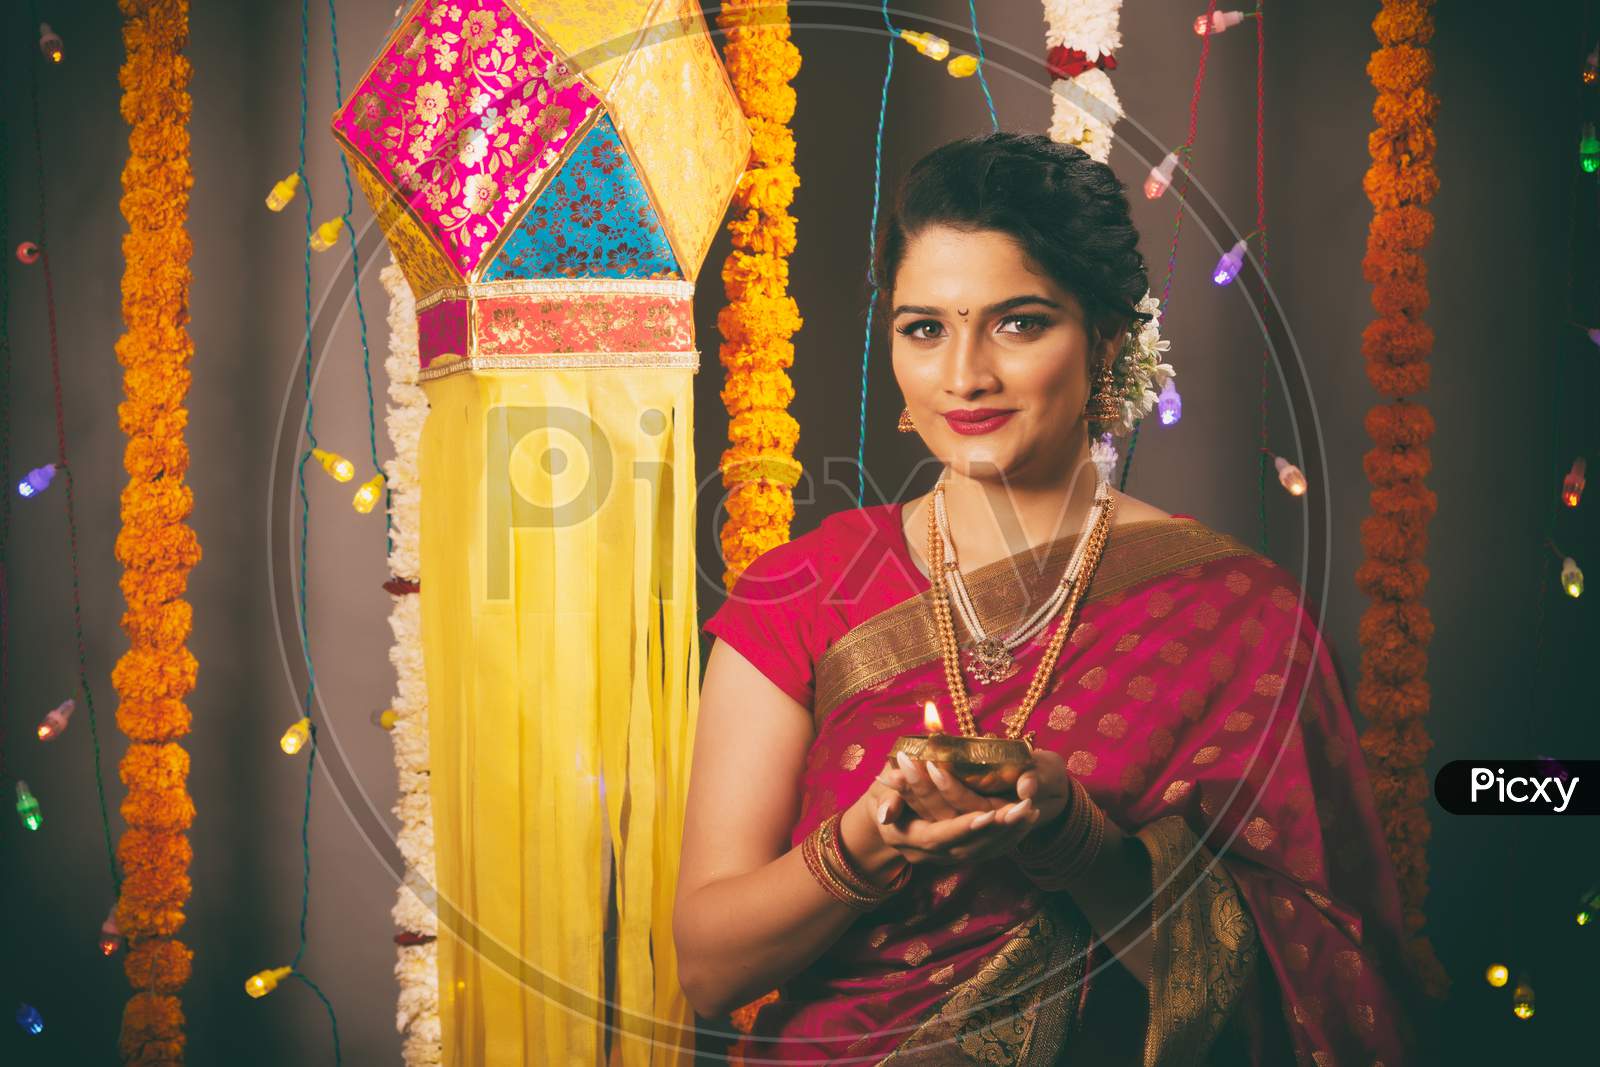 Young Indian woman celebrating Diwali festival